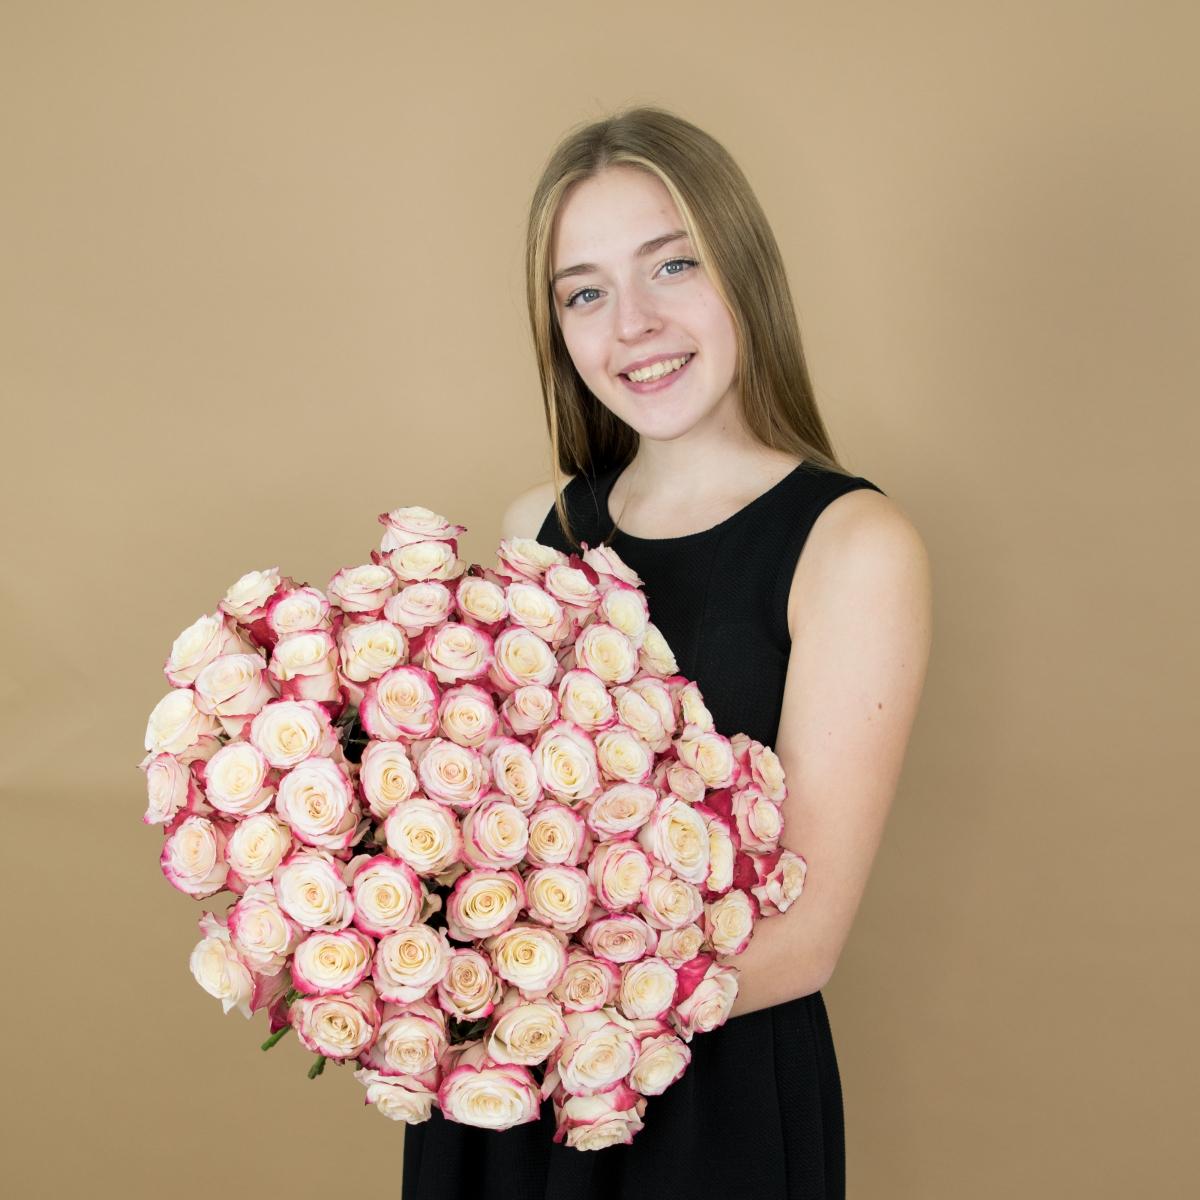 Розы красно-белые (40 см) Эквадор артикул букета: 450